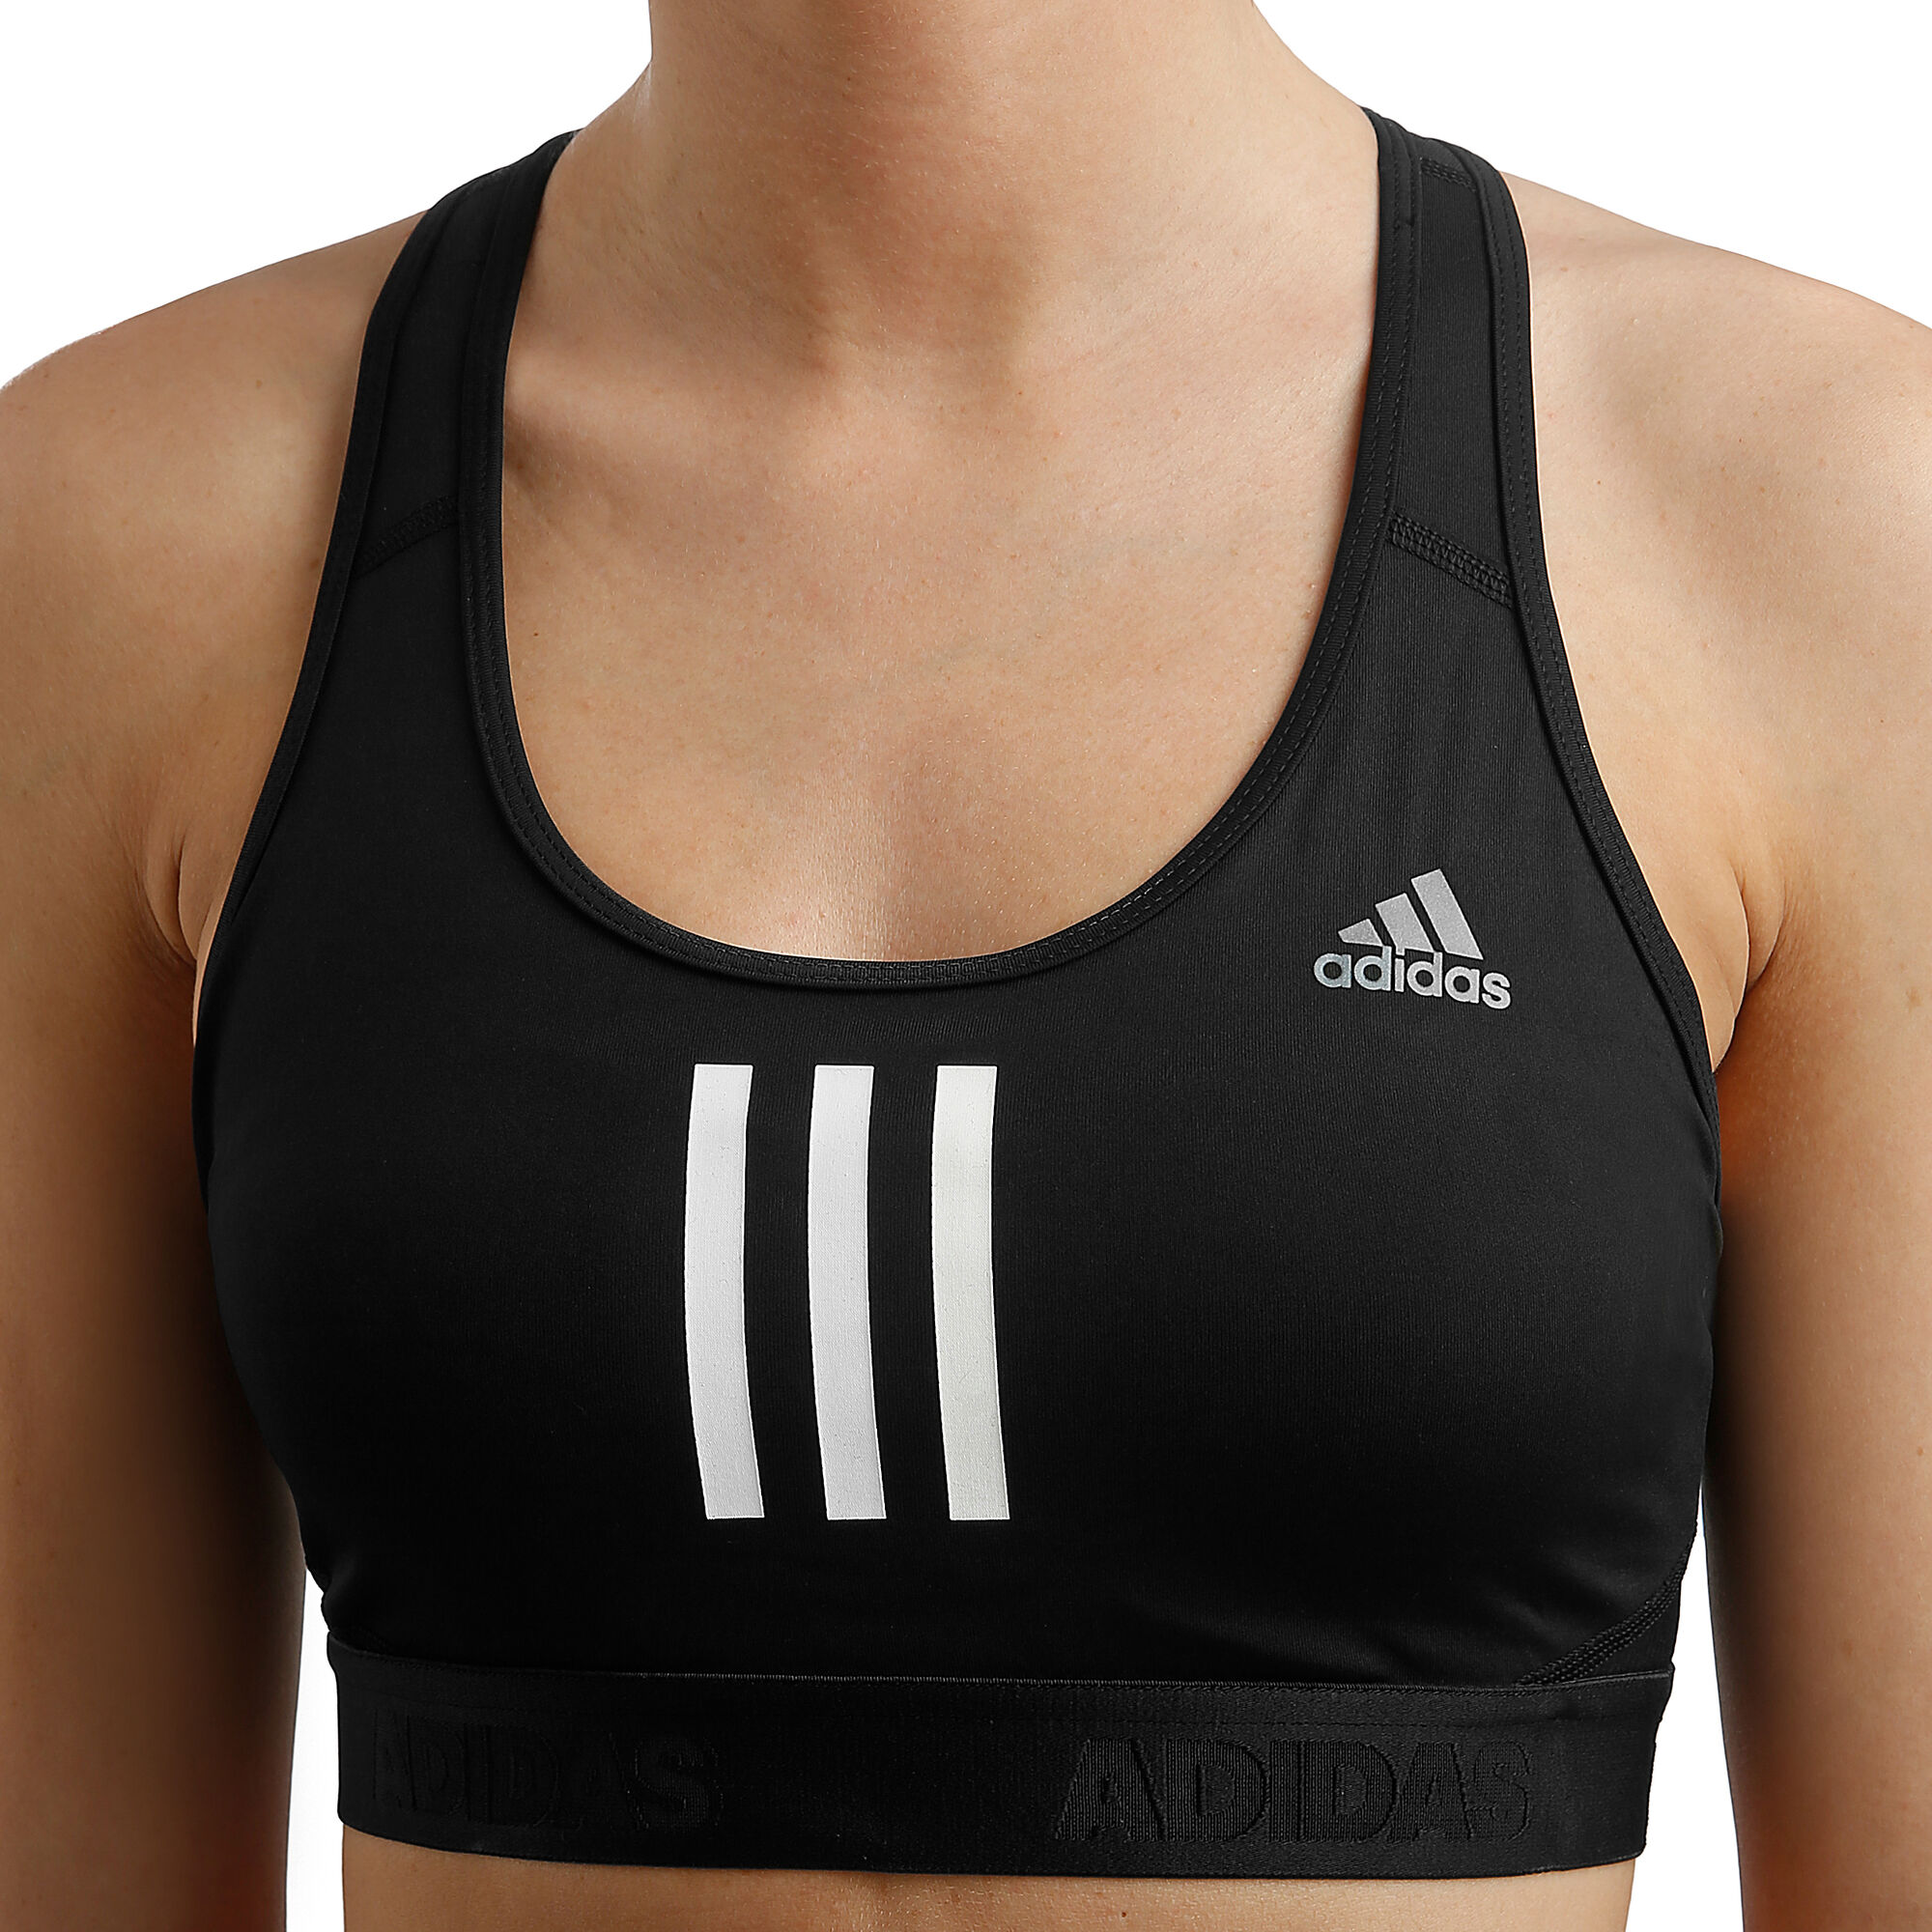 Buy adidas AlphaSkin 3 Stripes Sports Bras Women Black, White online